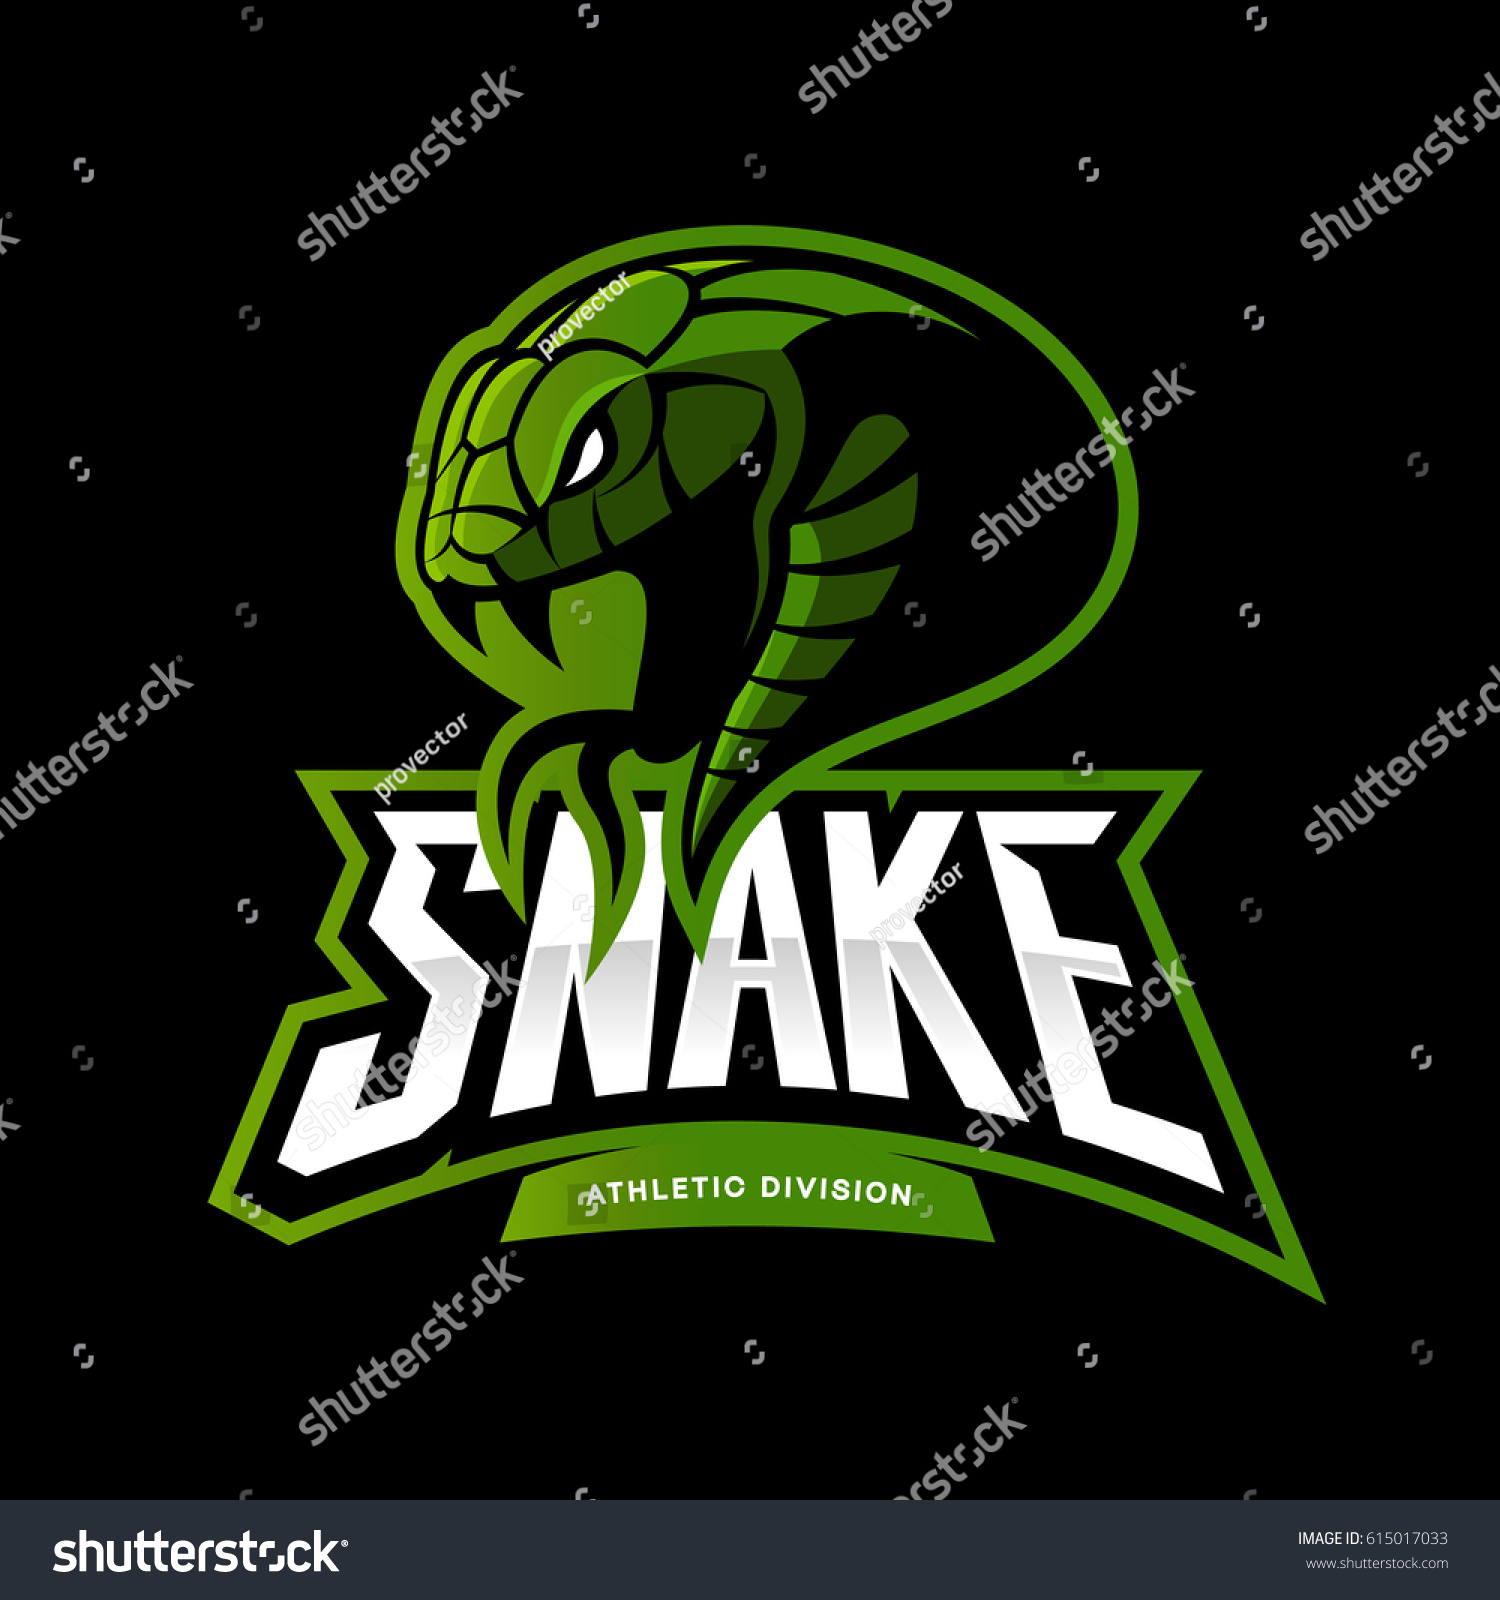 Furious Green Snake Sport Vector Logo Stock Vector 615017033 - Shutterstock